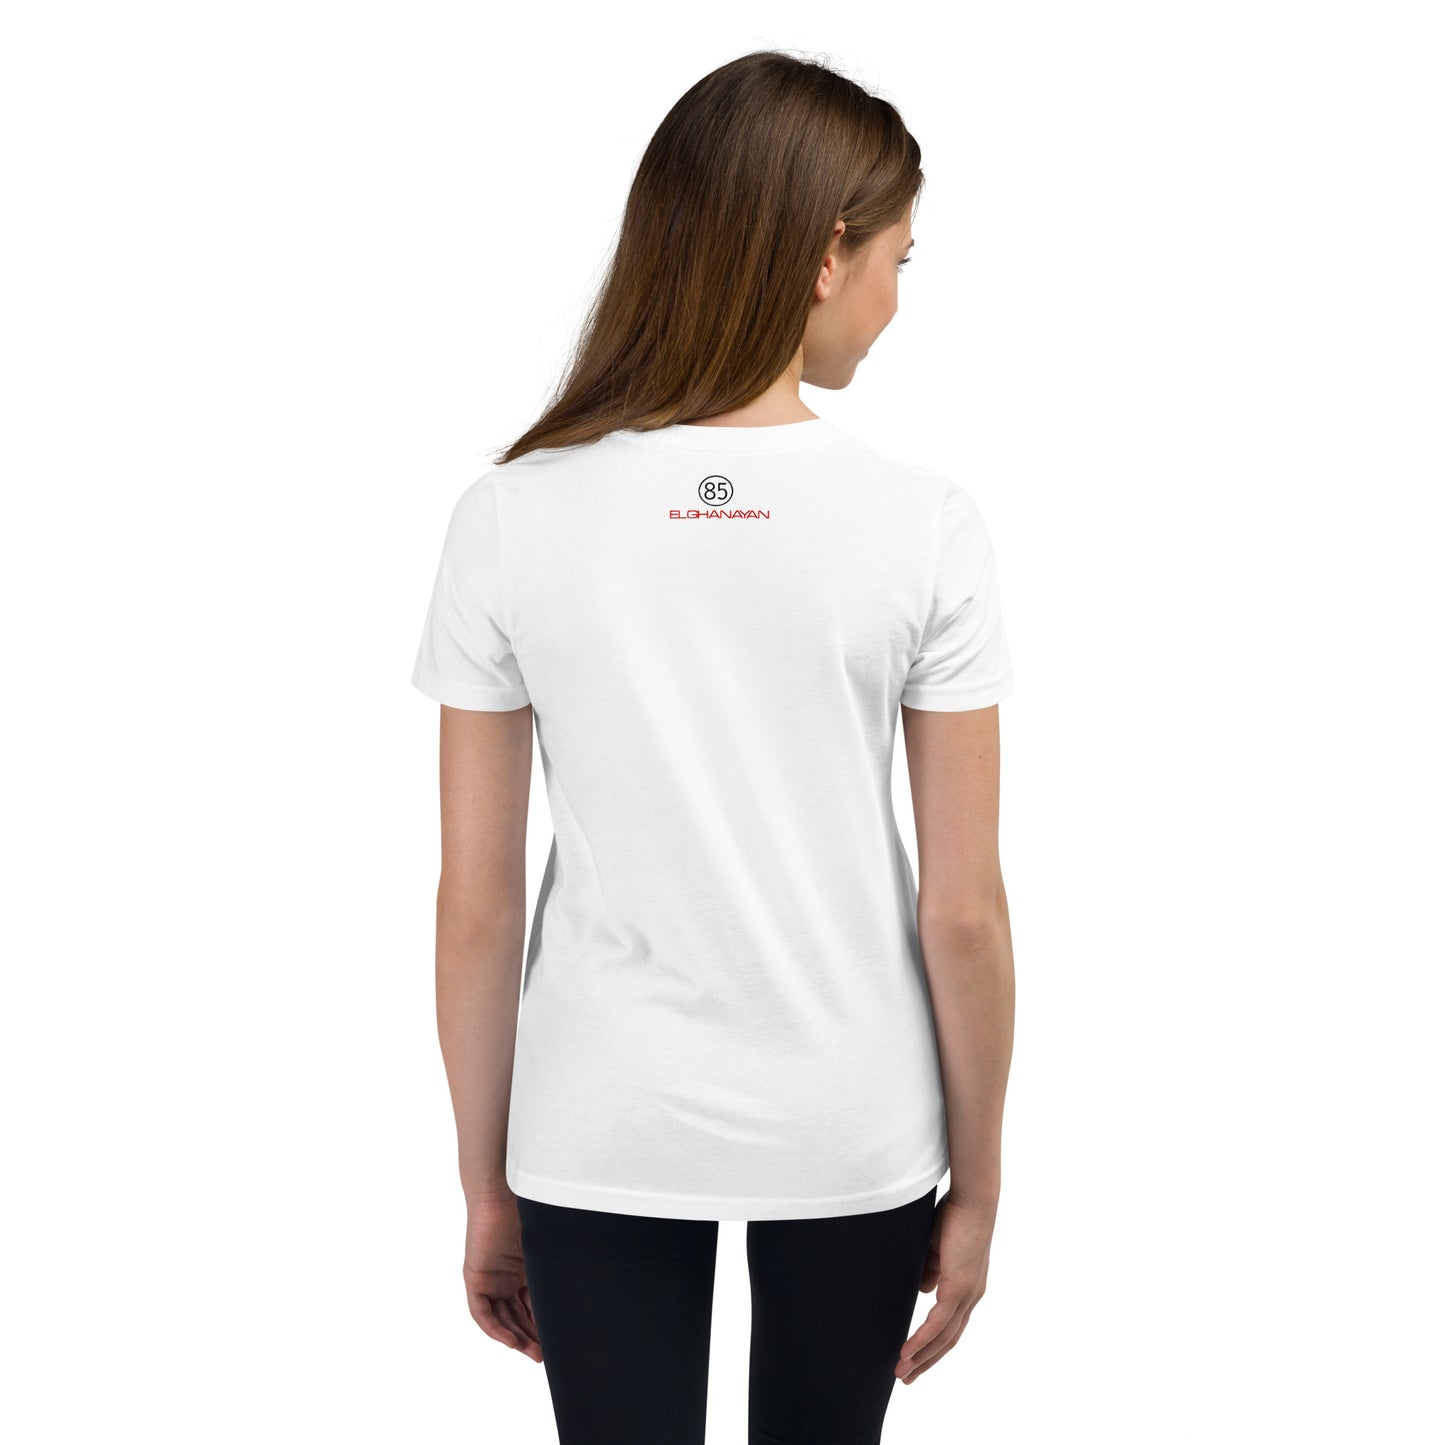 Unisex 'Elghanayan 85' Youth Short Sleeve T-Shirt